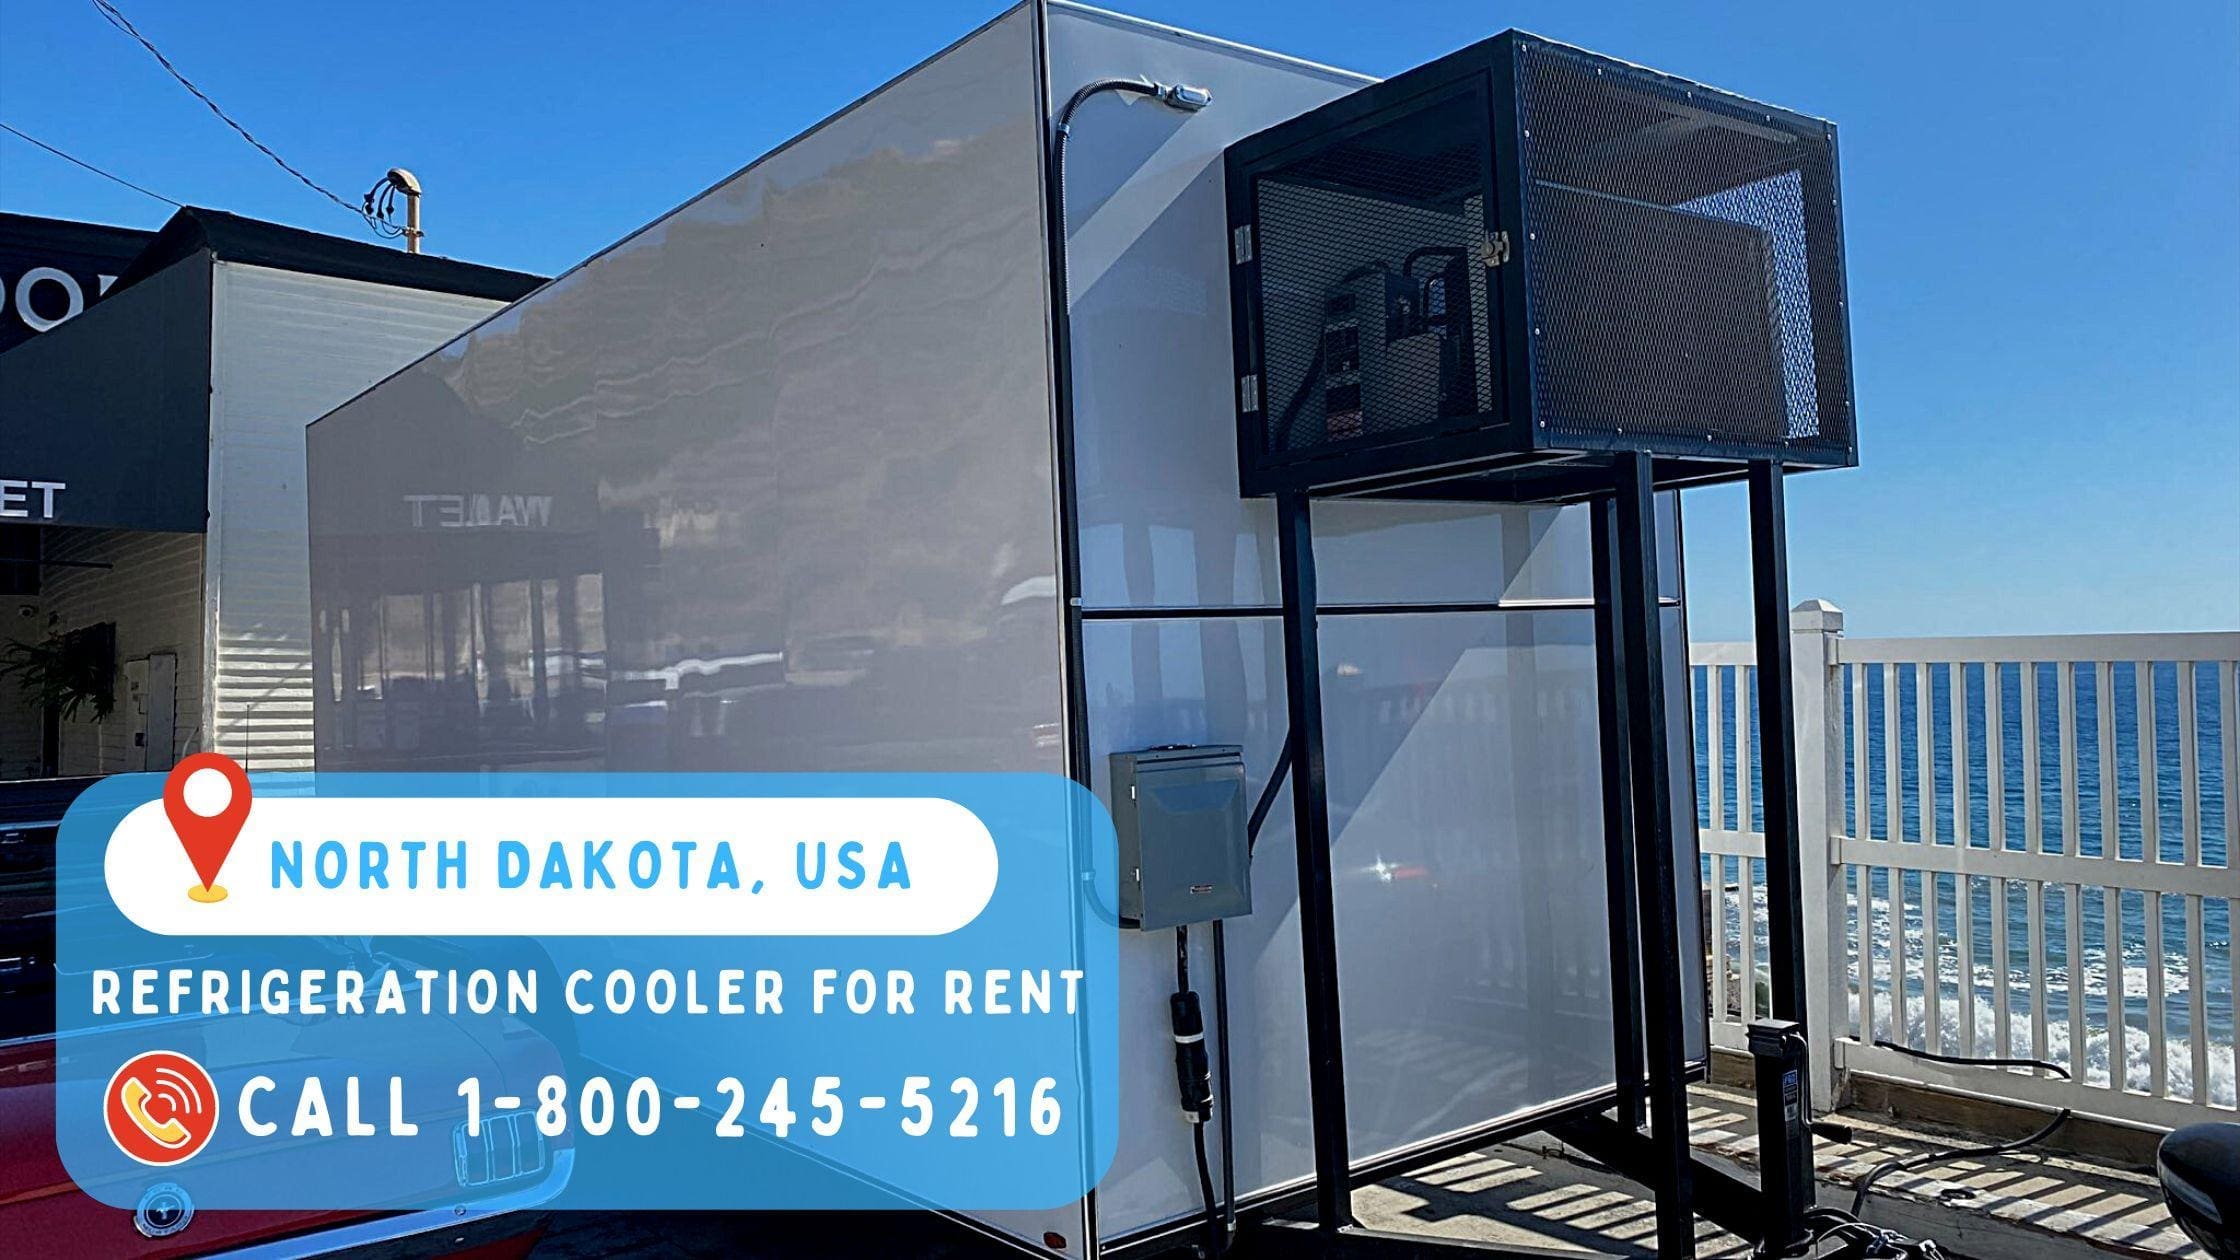 https://b3366852.smushcdn.com/3366852/wp-content/uploads/2023/01/Refrigeration-Cooler-for-Rent-in-North-Dakota-1.jpg?lossy=2&strip=1&webp=1